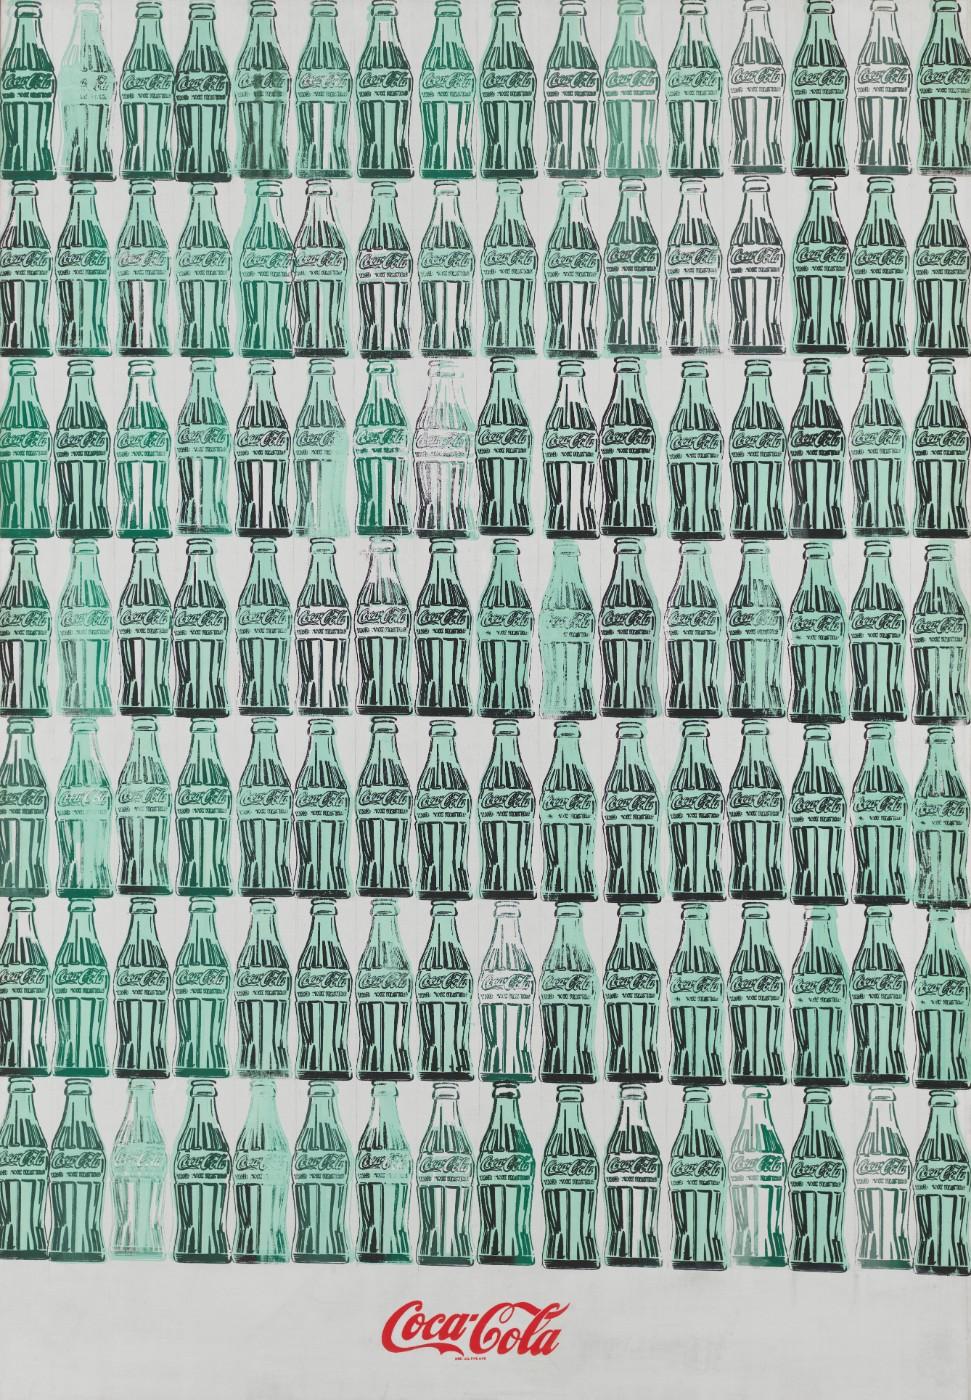 Andy Warhol (1928-1987), Green Coca-Cola Bottles, 1962